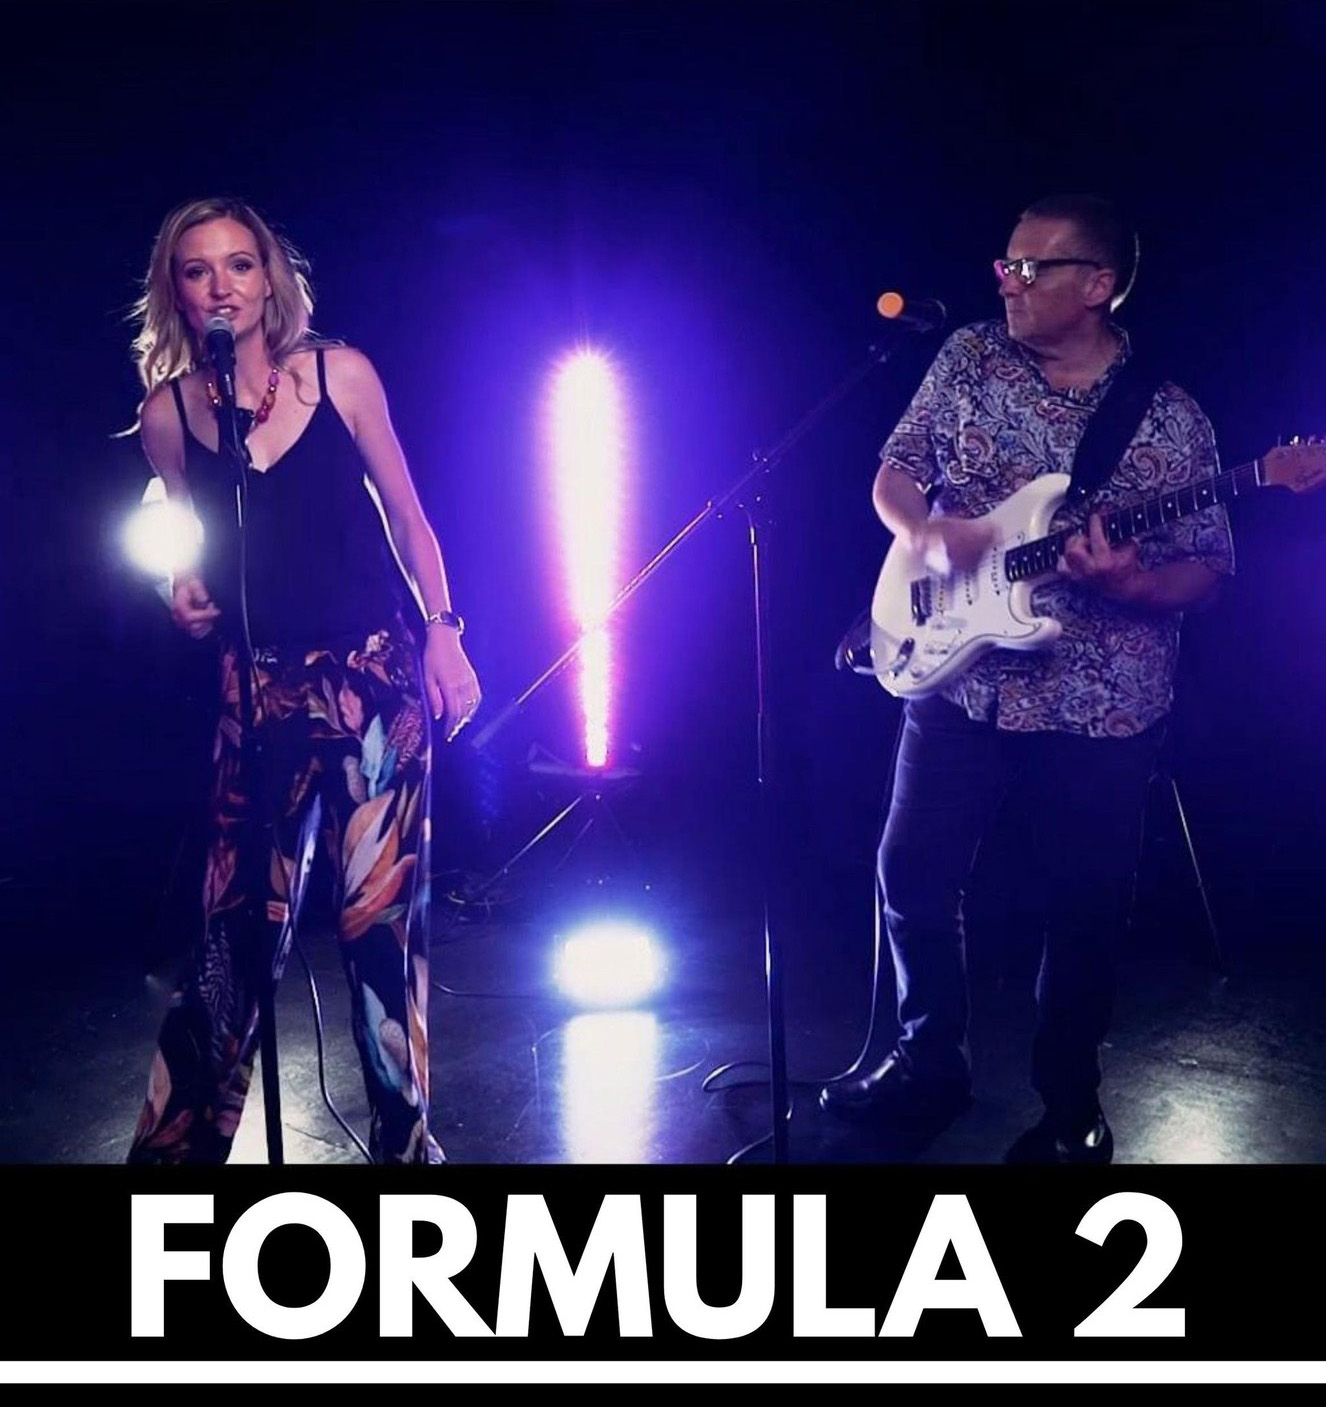 Formula2